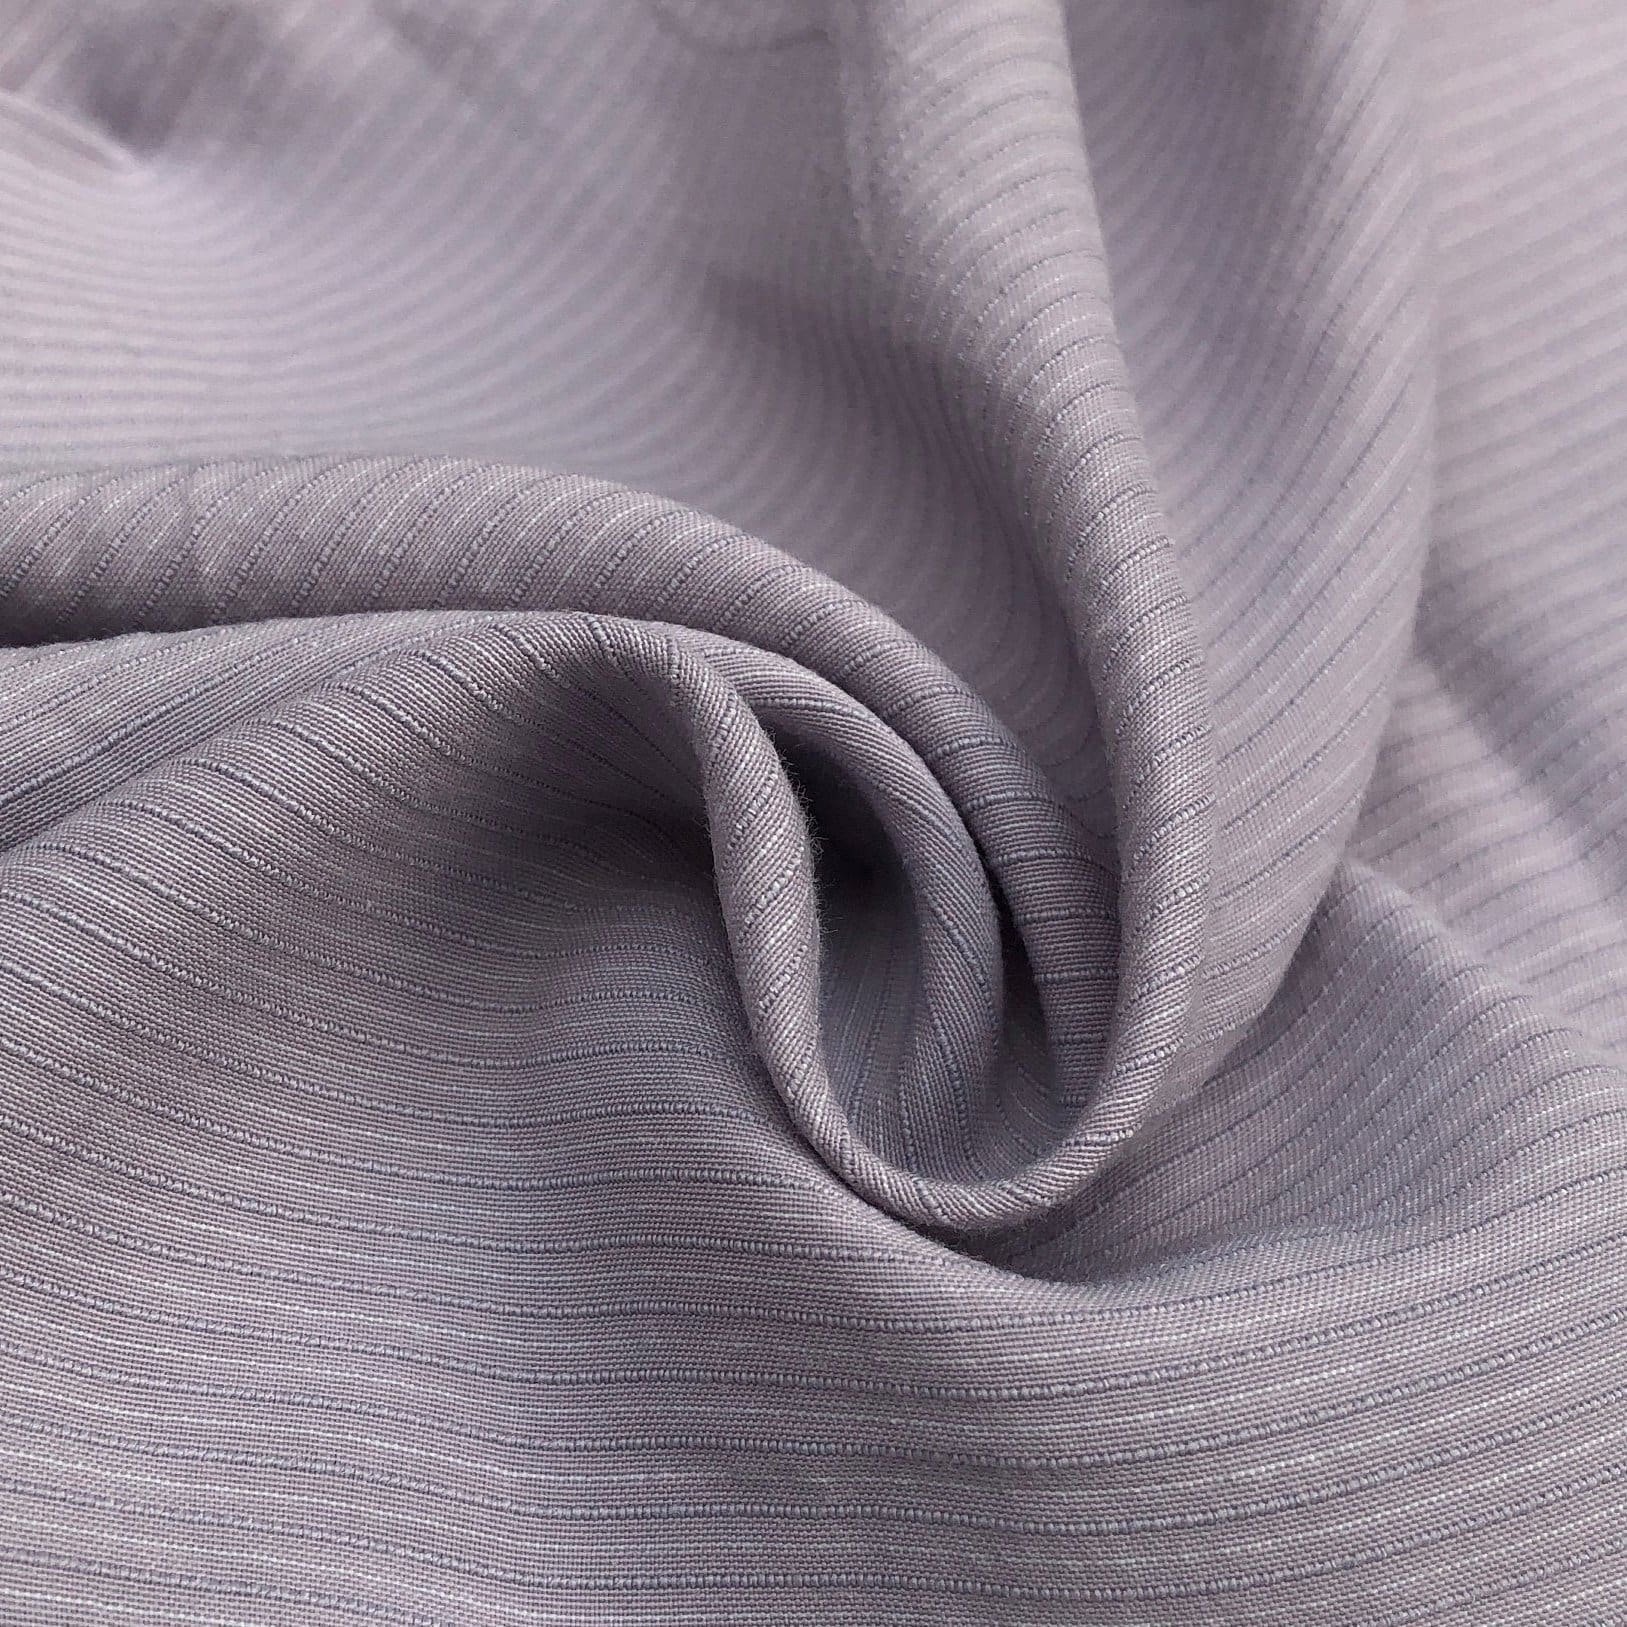 58 Cotton & Tencel Lyocell Blend Striped Multicolor Light Woven